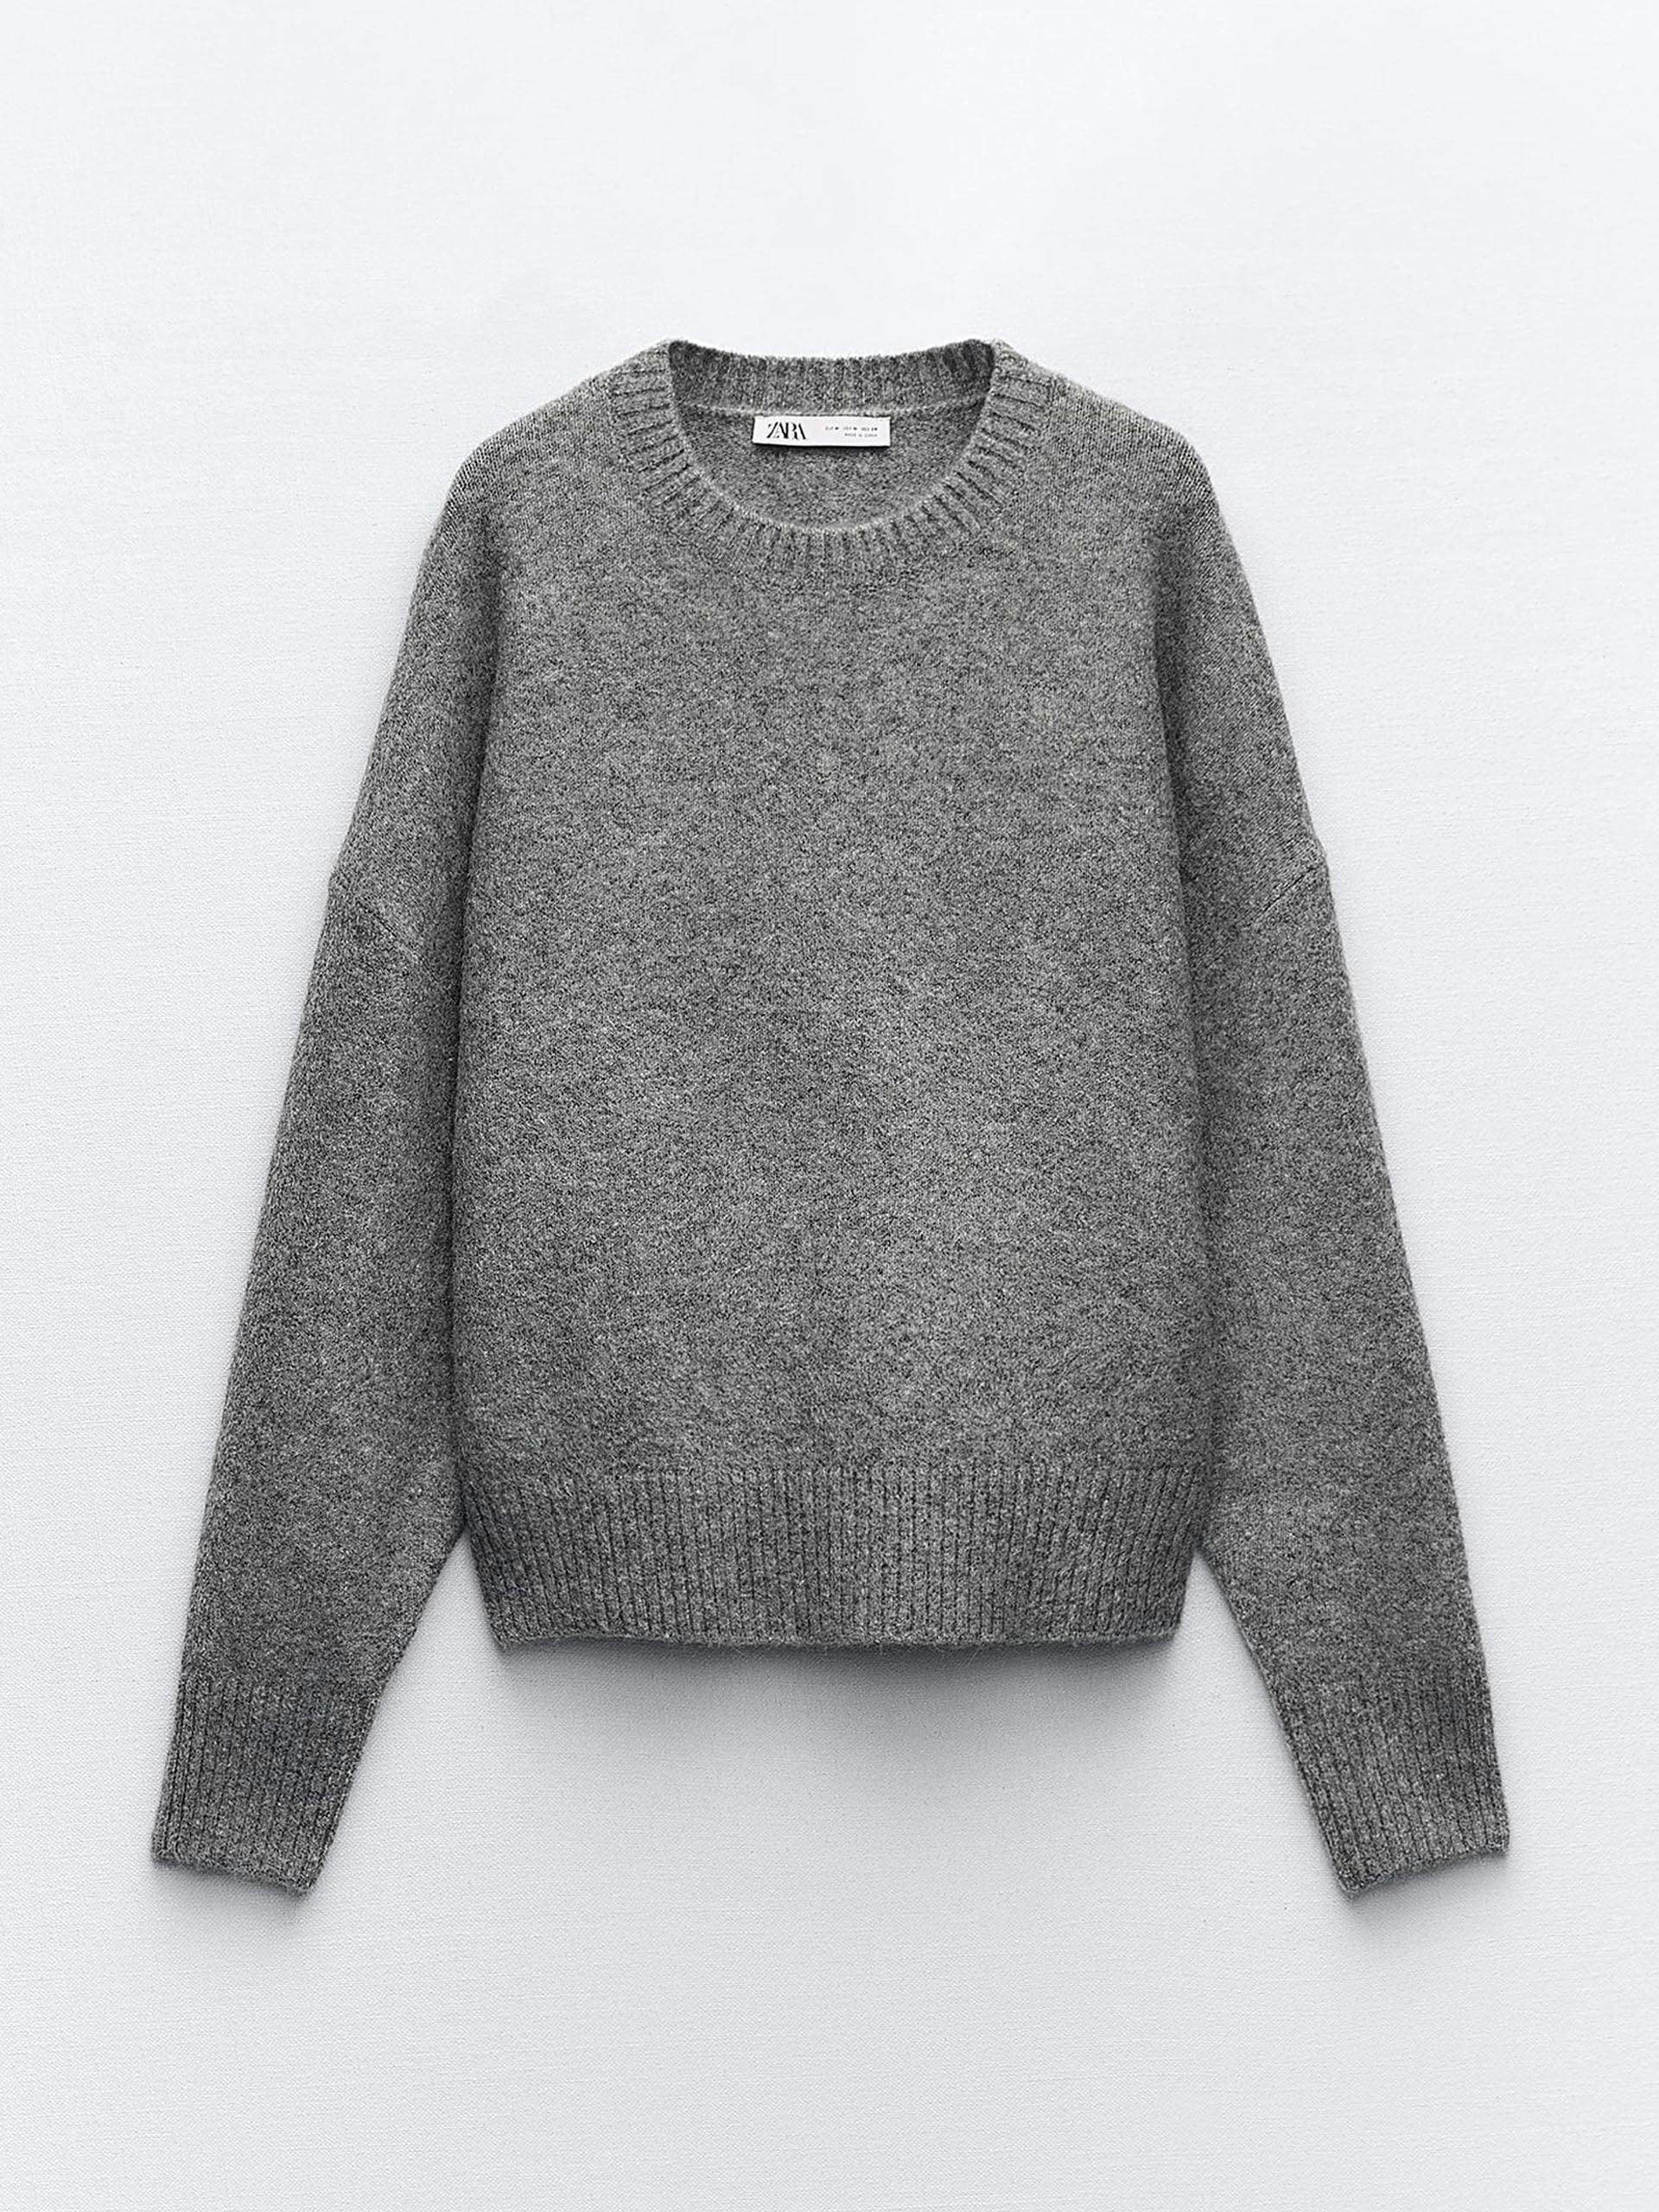 Soft grey knit sweater